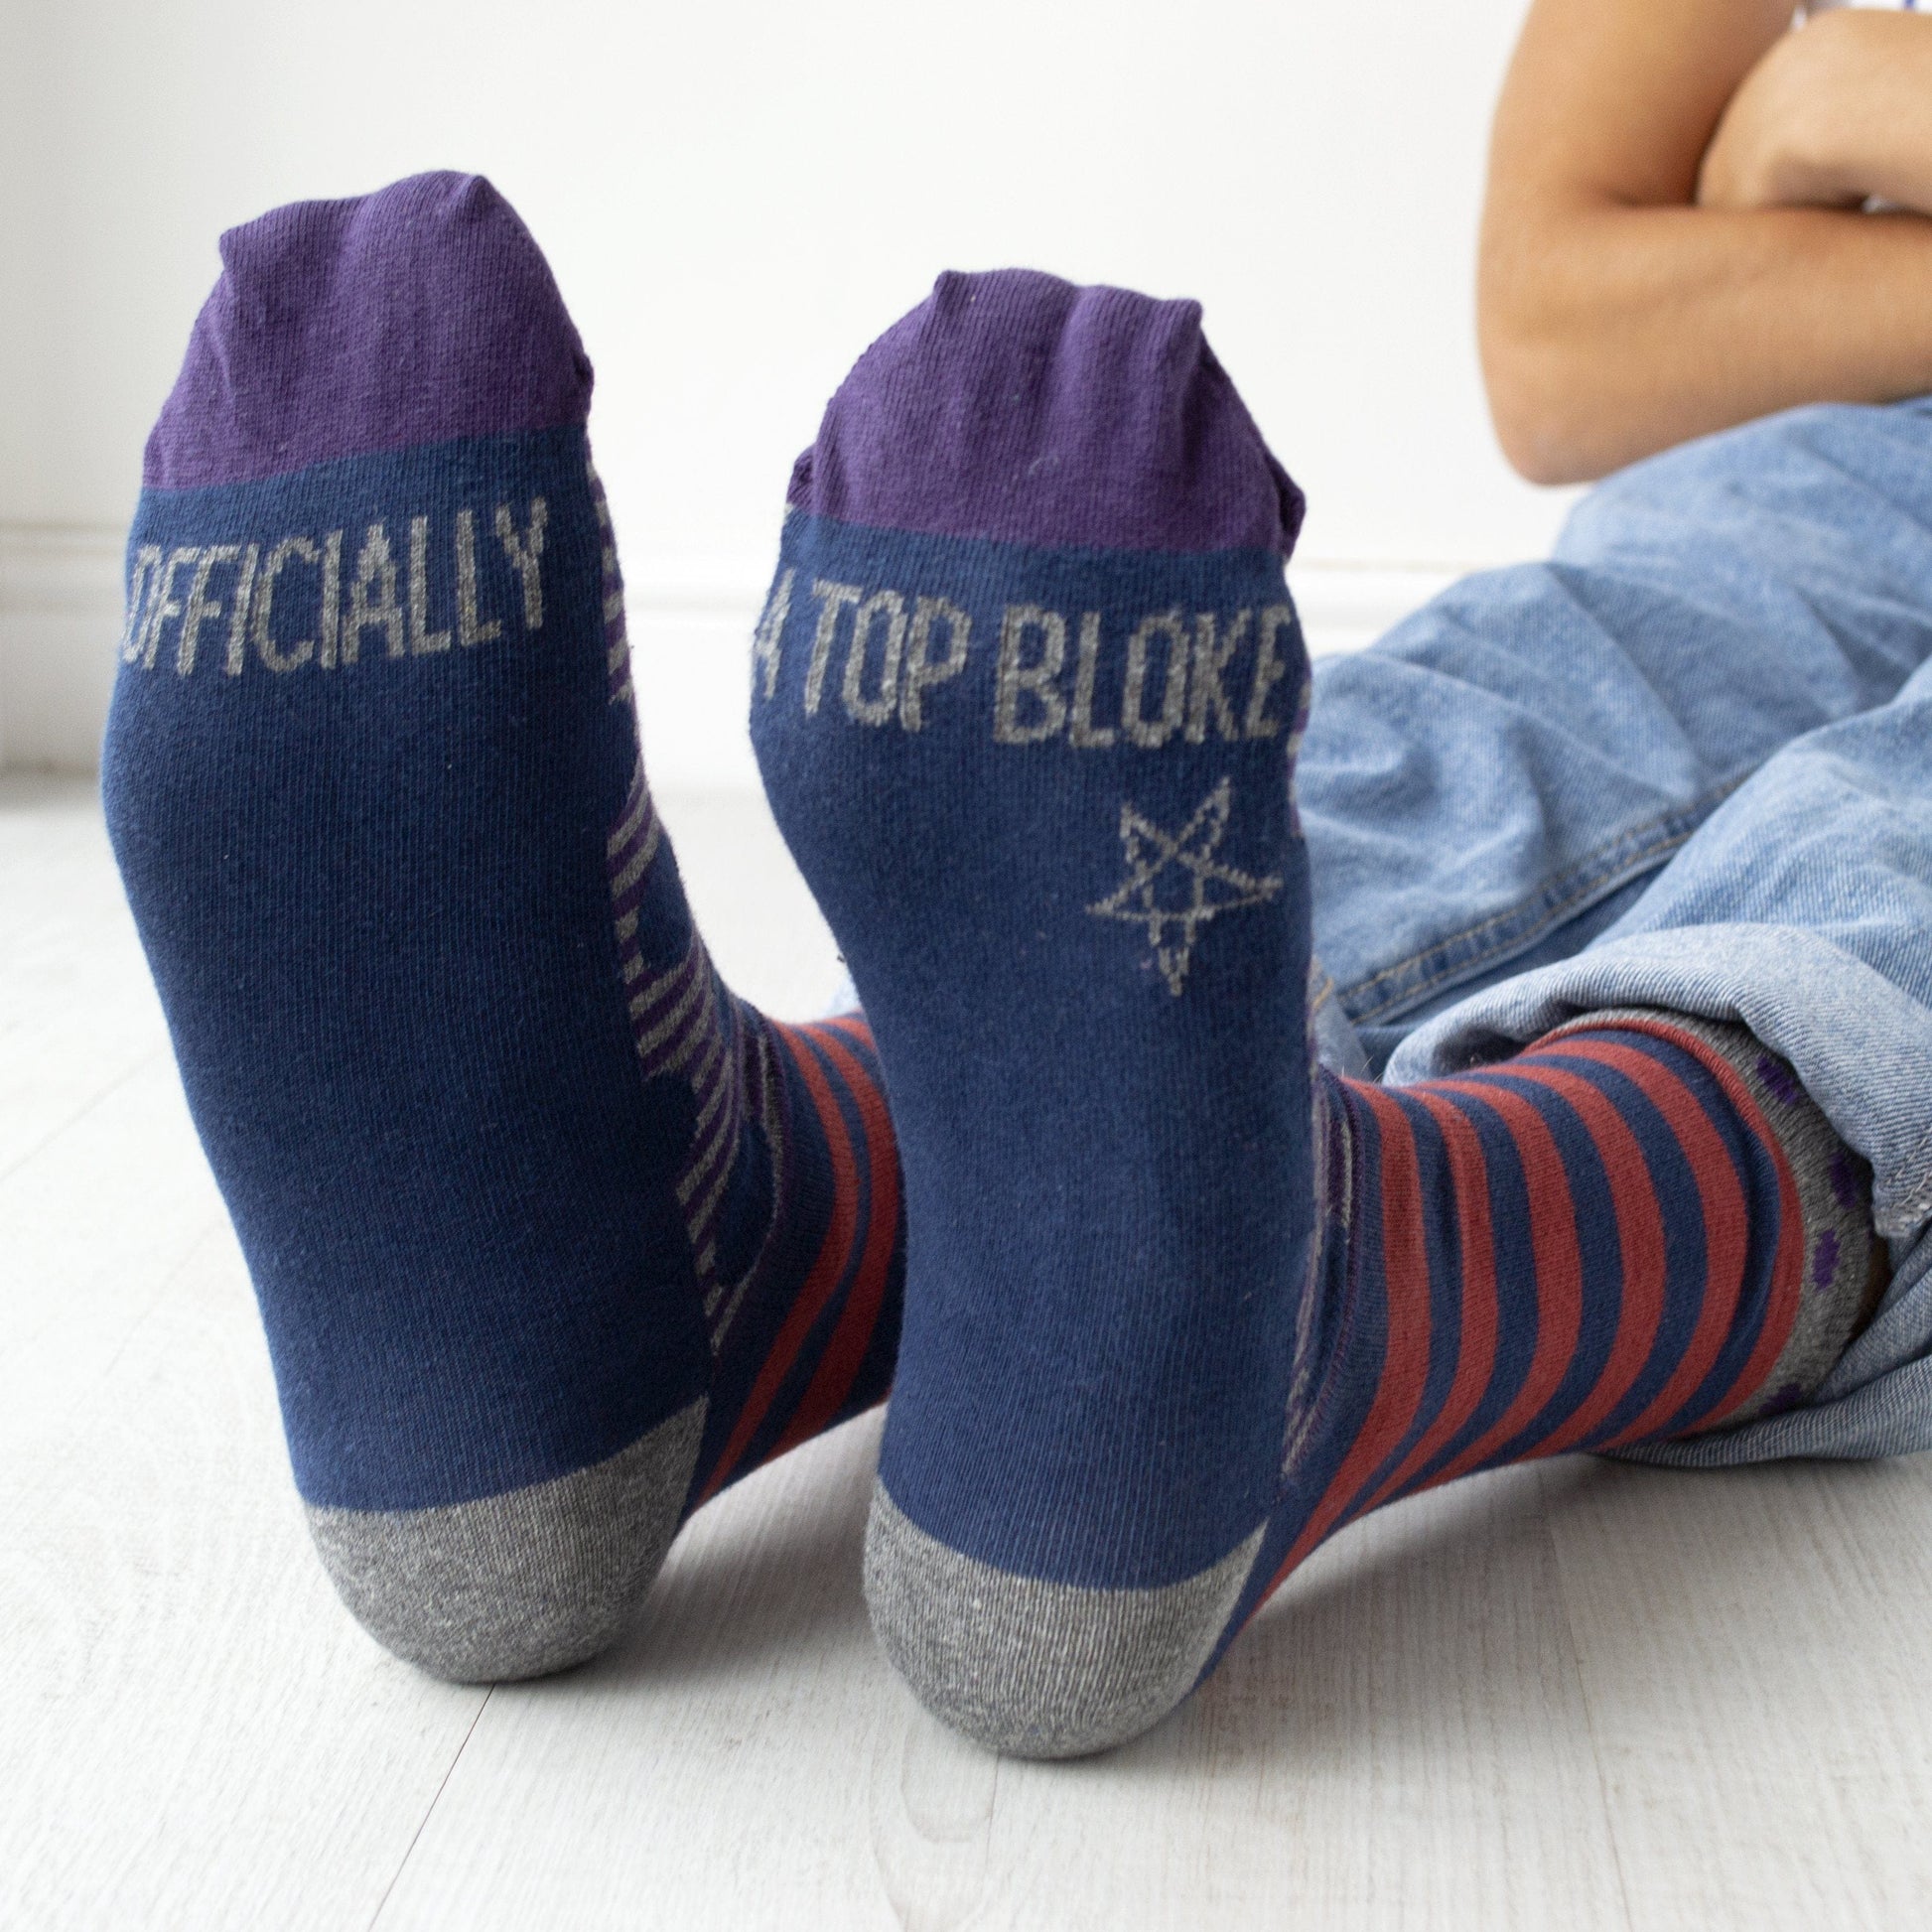 Top Bloke Patterned Slogan Socks, Socks, - ALPHS 